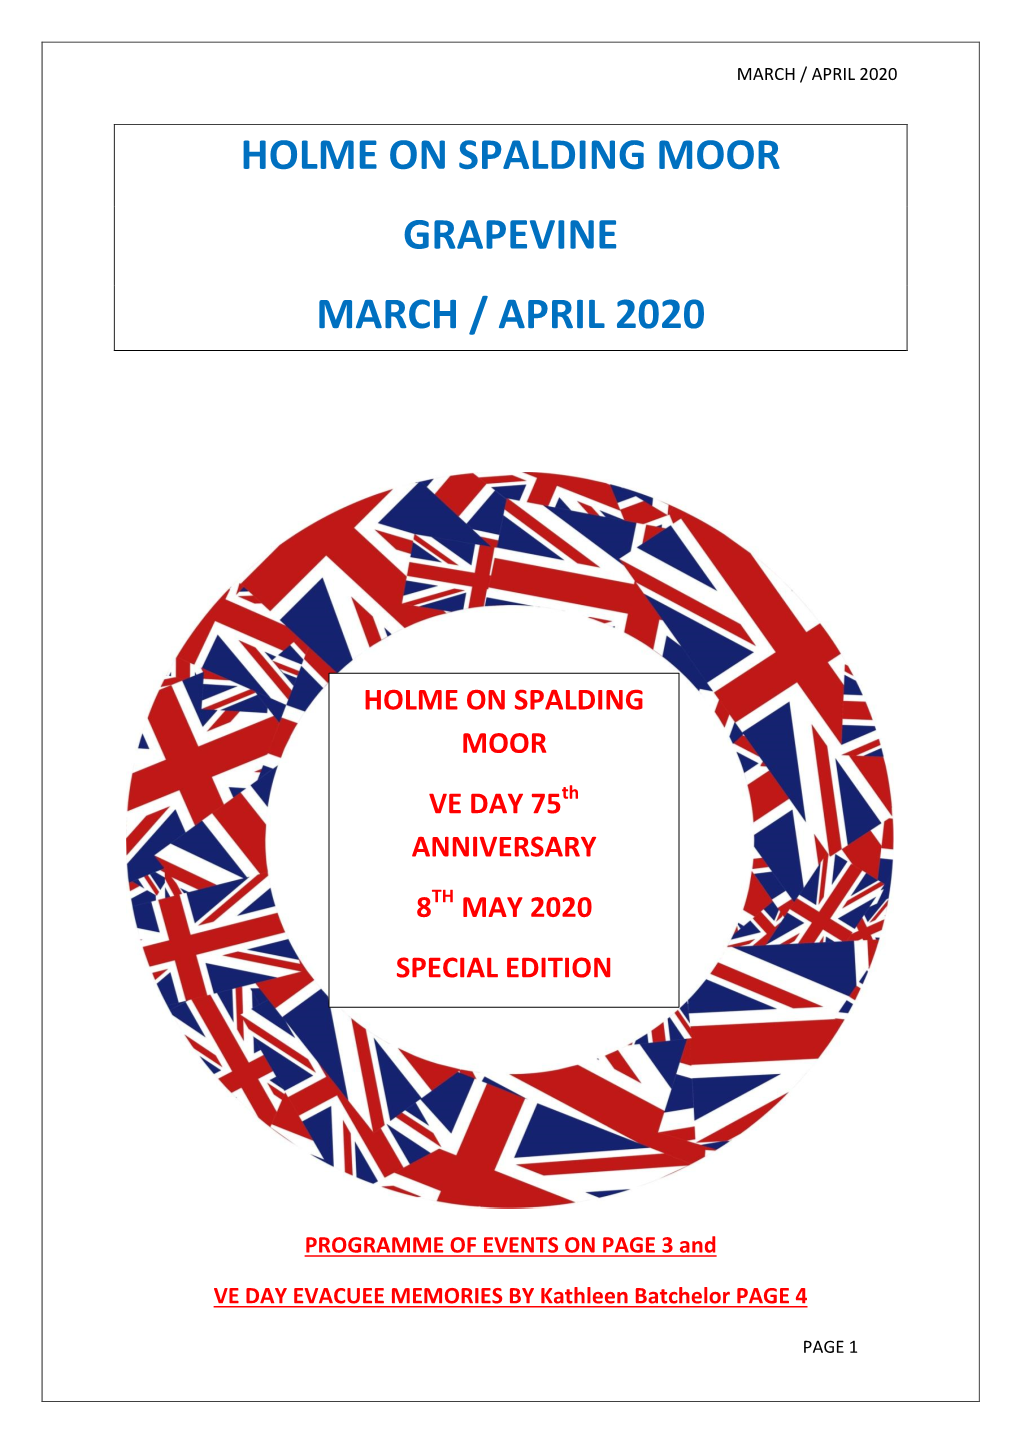 Holme on Spalding Moor Grapevine March / April 2020